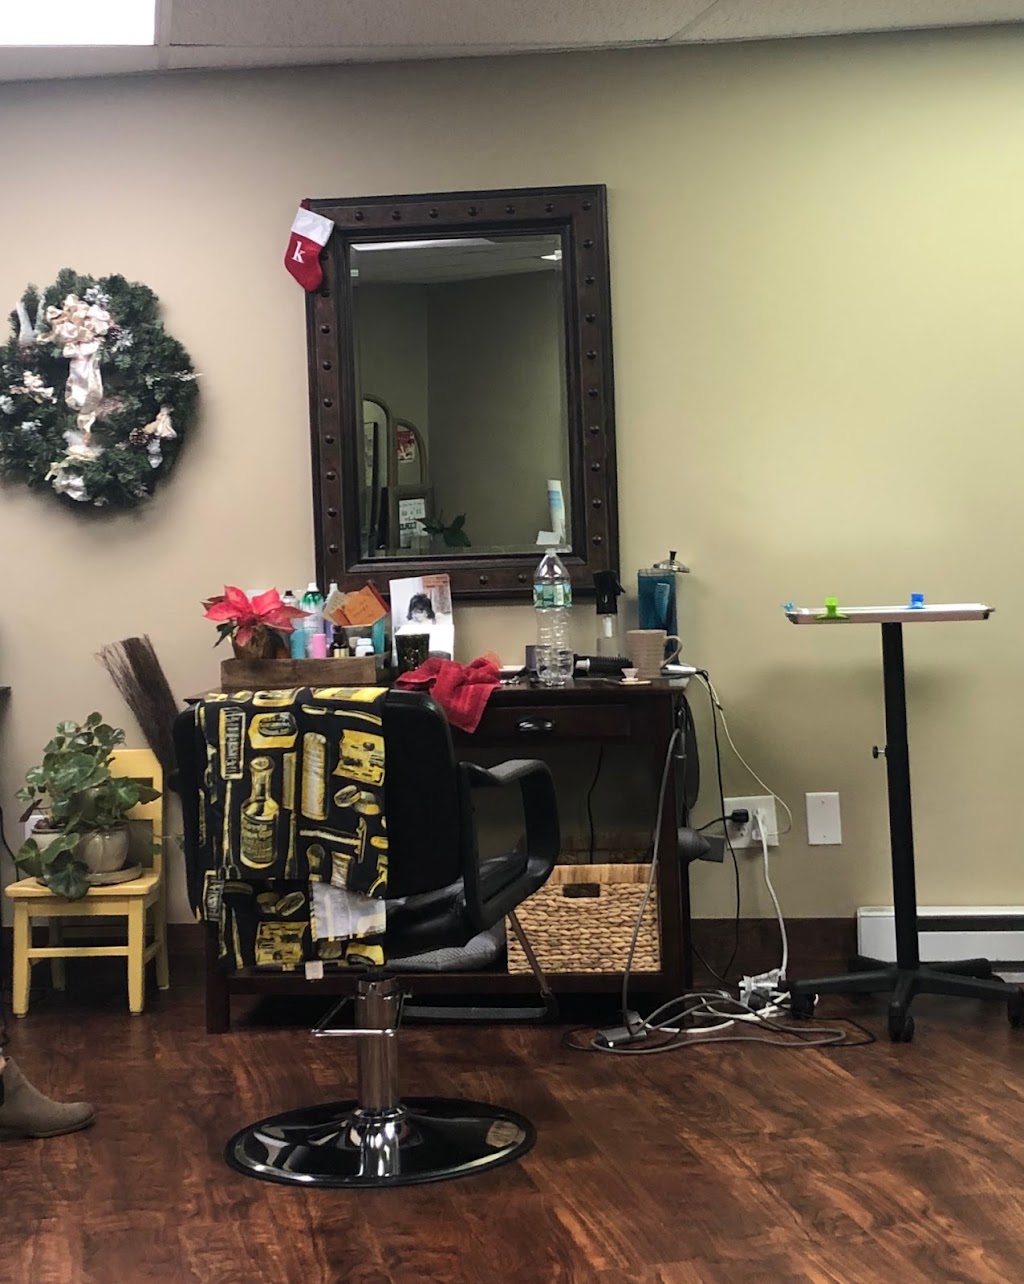 Hair salon | 8 Old North Rd, Amenia, NY 12501 | Phone: (845) 373-8490